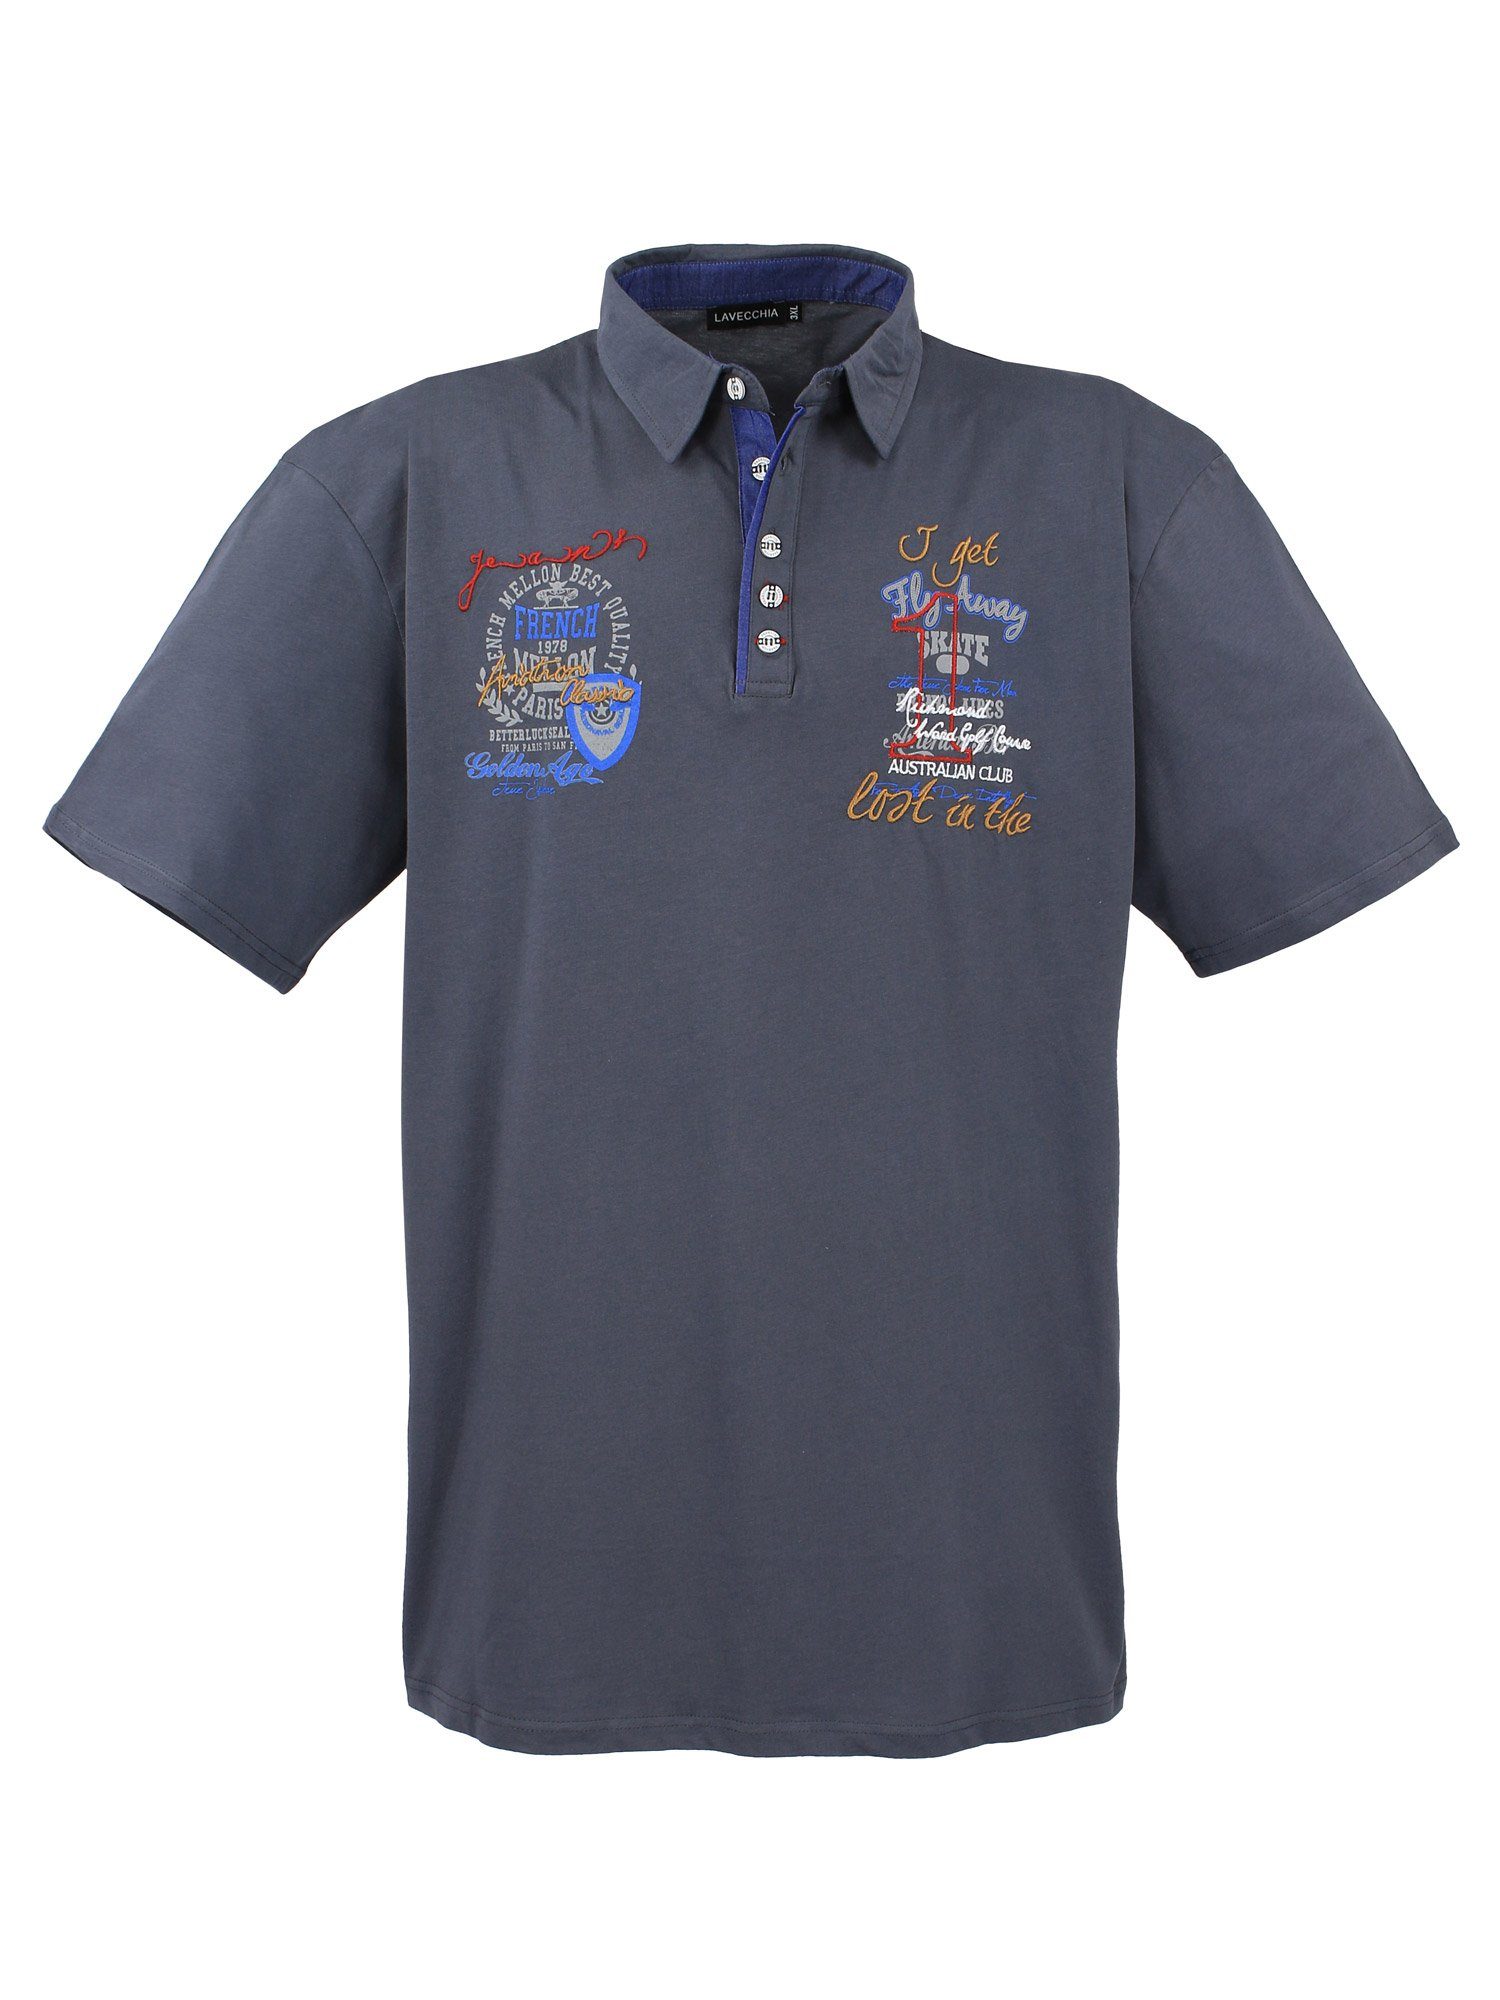 Lavecchia Poloshirt Übergrößen Herren Polo Shirt LV-3101 Herren Polo Shirt anthrazit